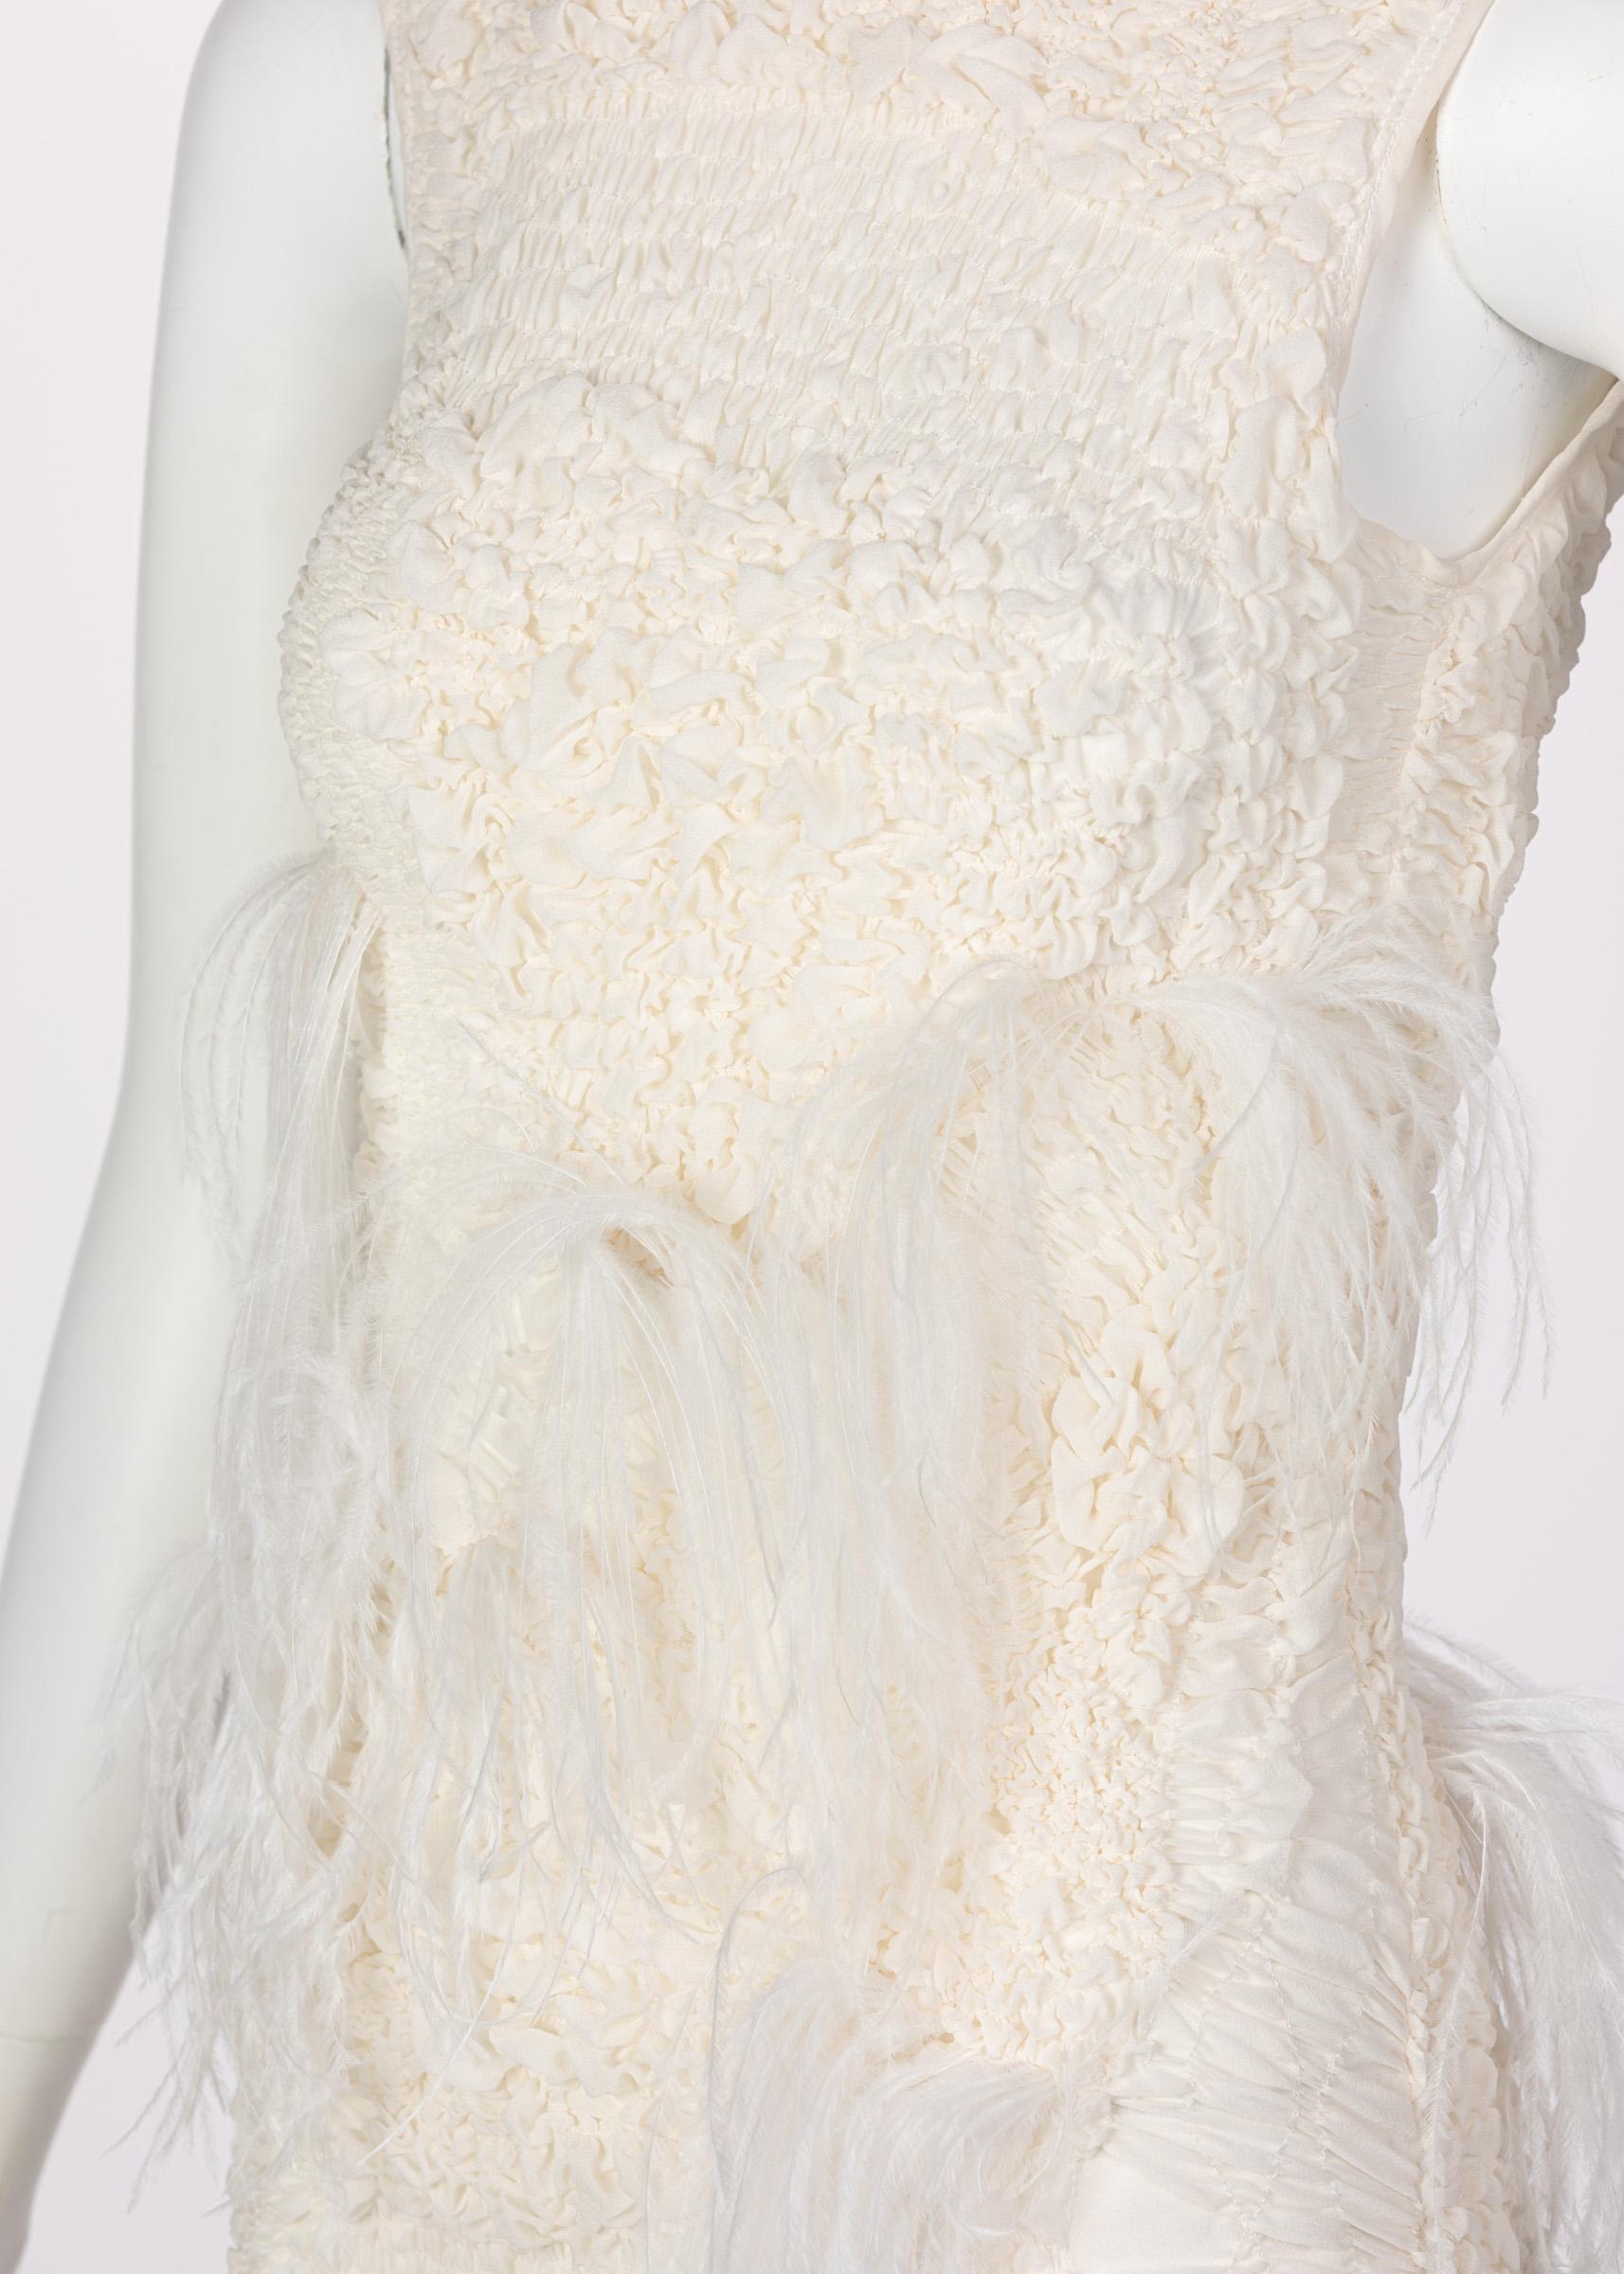 Nina Ricci Ivory Silk Feather Embellished Dress, Spring 2016 For Sale 3